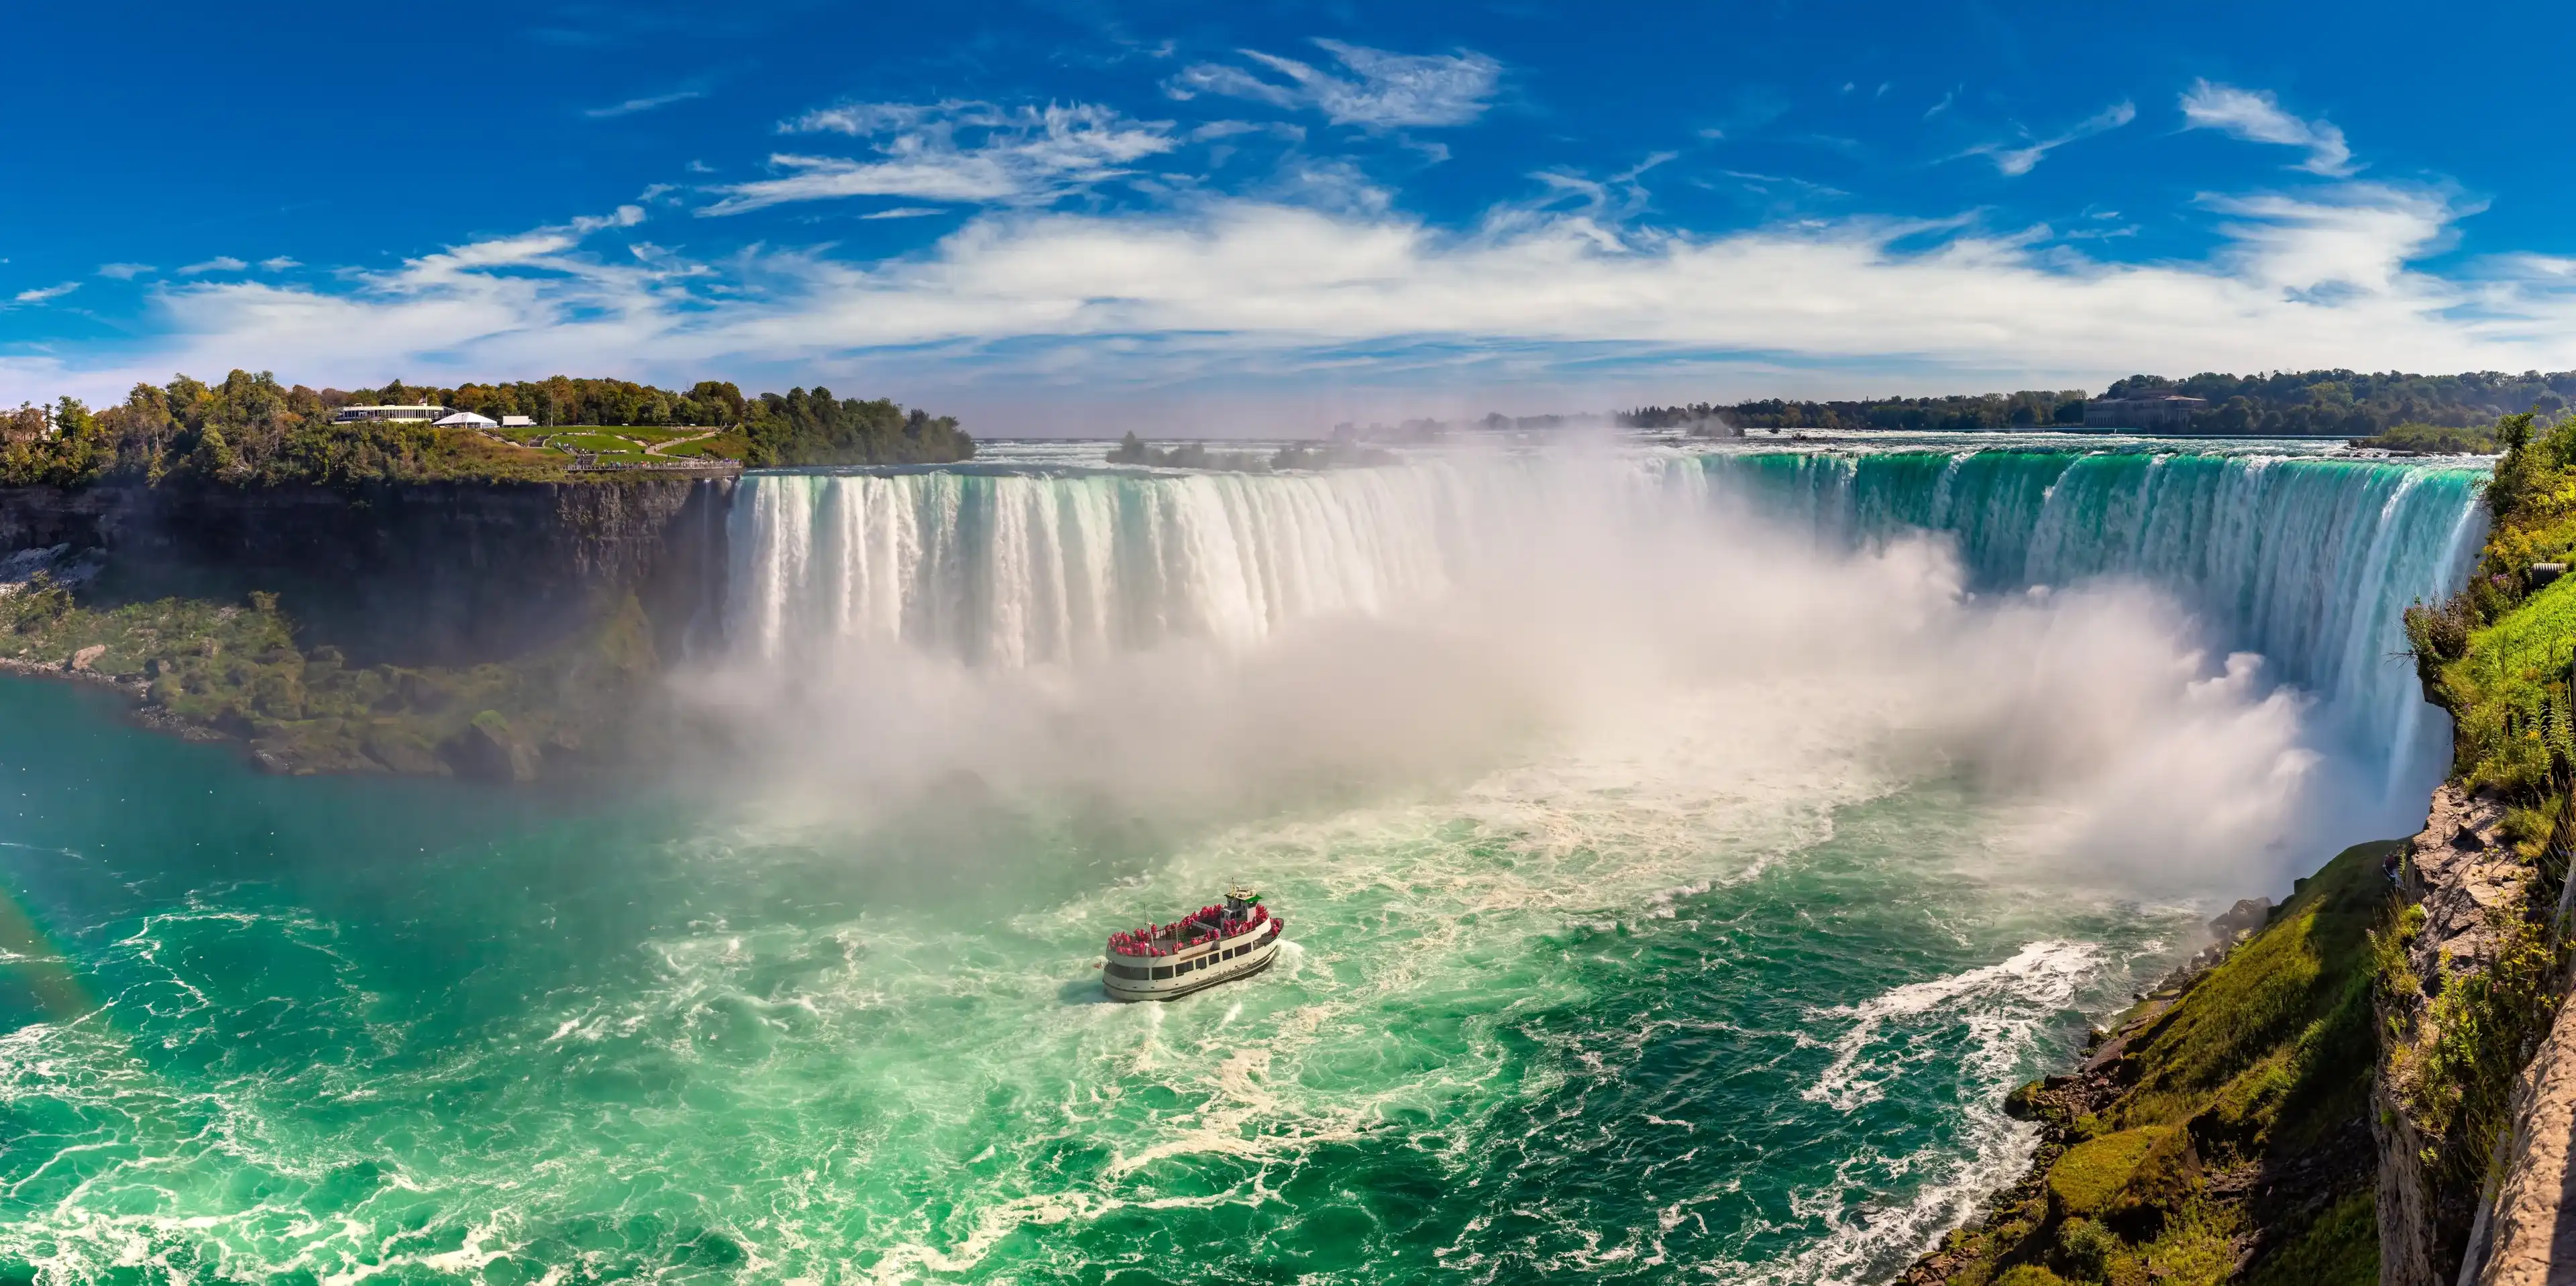 Best Niagara Falls hotels. Cheap hotels in Niagara Falls, Ontario, Canada